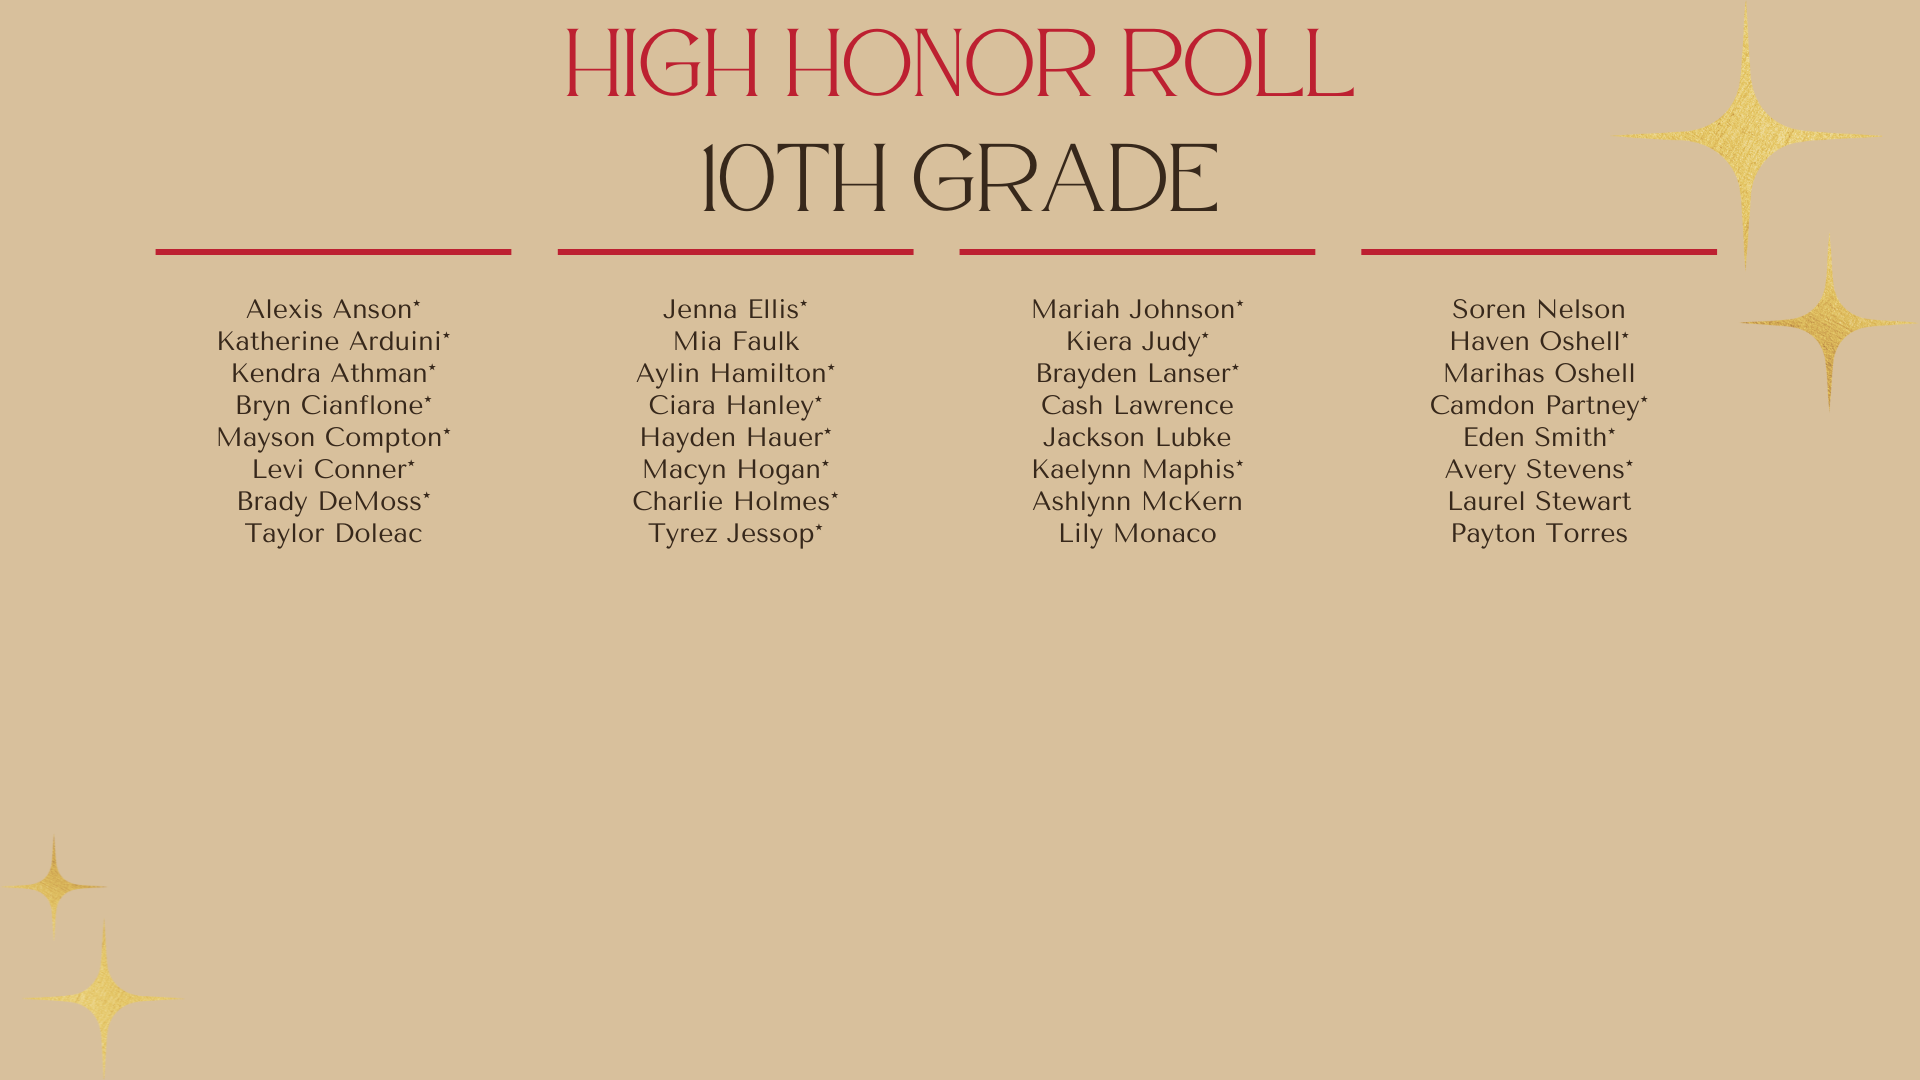 High Honor Roll 10th Grade